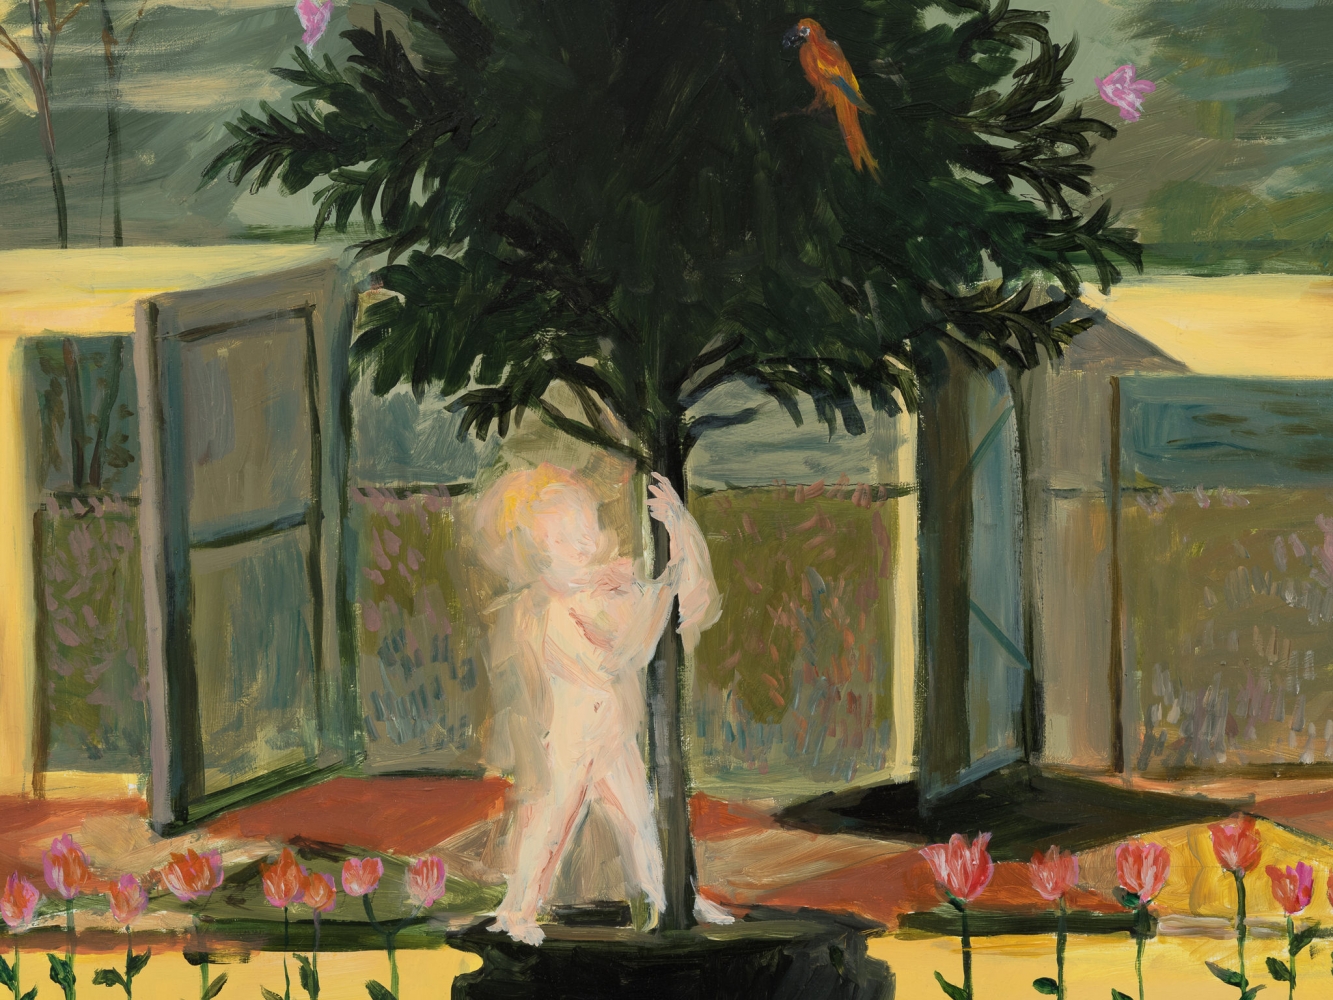 Karen Kilimnik, the mimosa tree in the garden of the gods